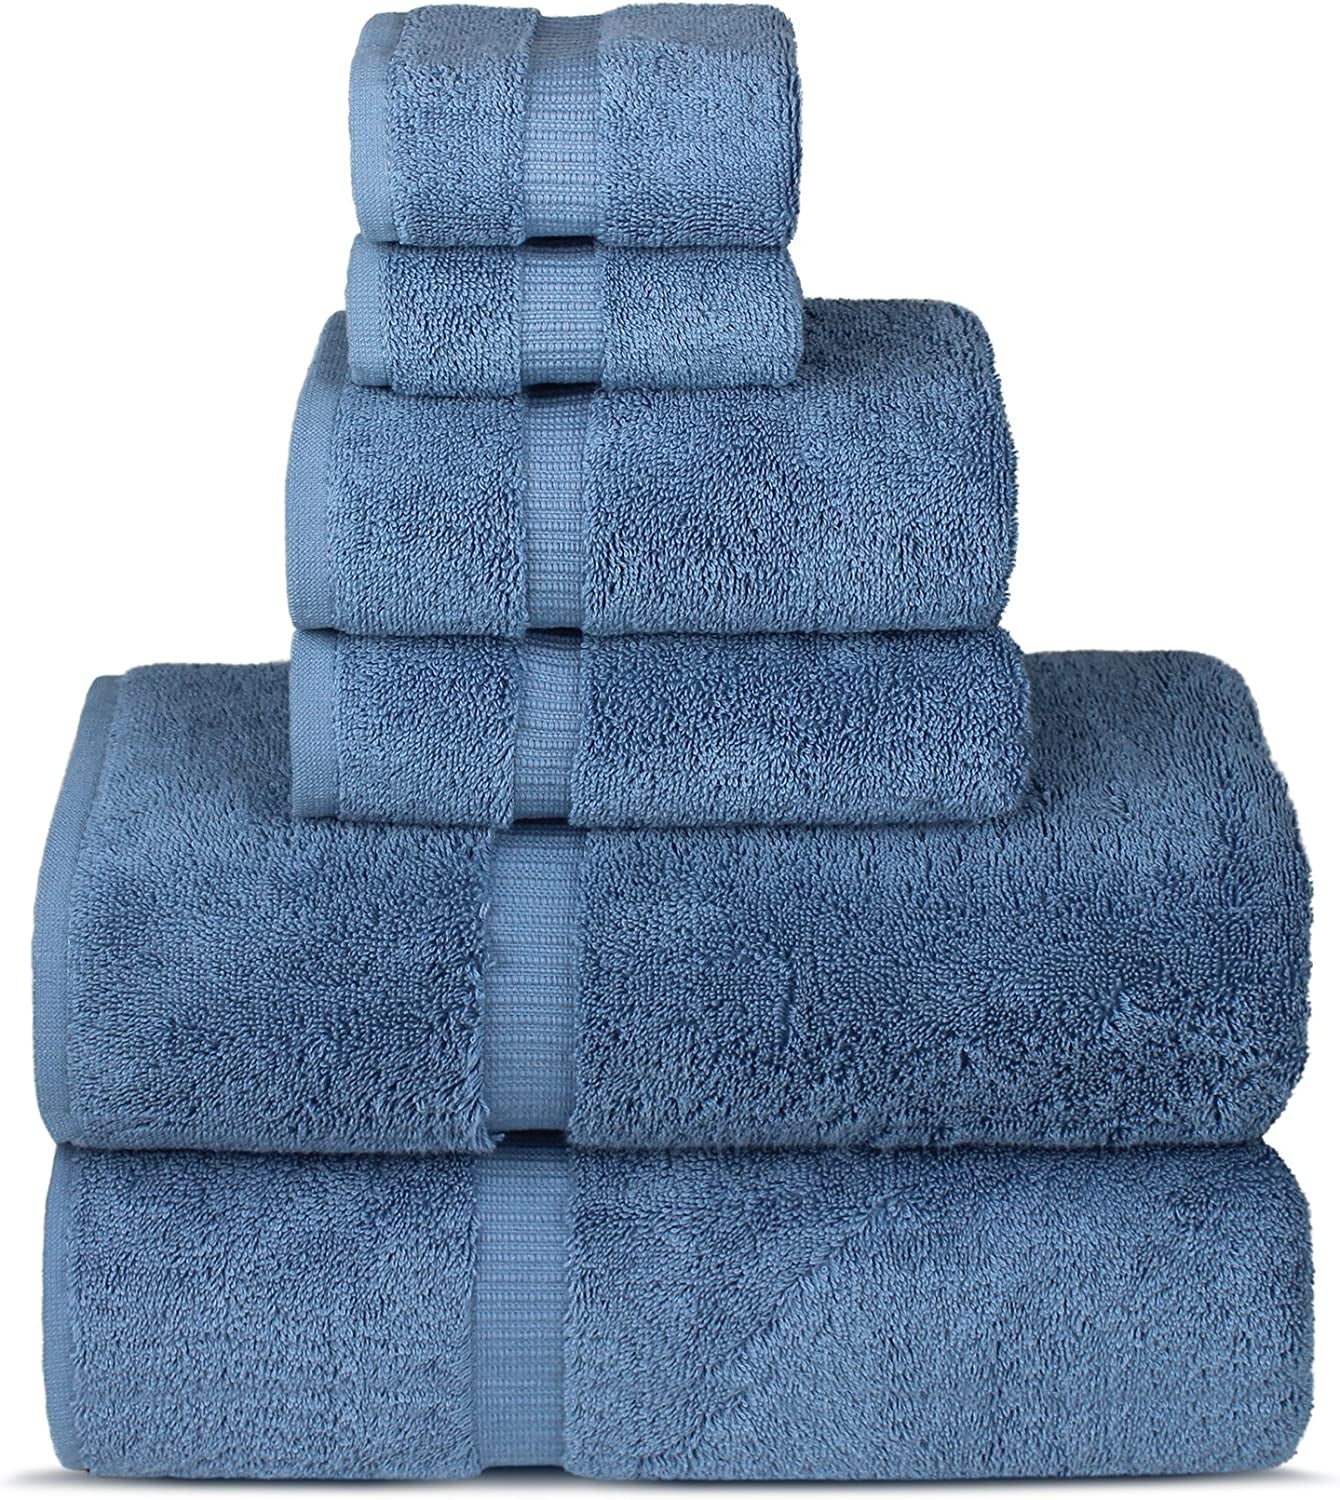 Luxury Spa and Hotel Quality Premium Turkish Cotton 6-Piece Towel Set (2 X Bath Towels, 2 X Hand Towels, 2 X Washcloths)